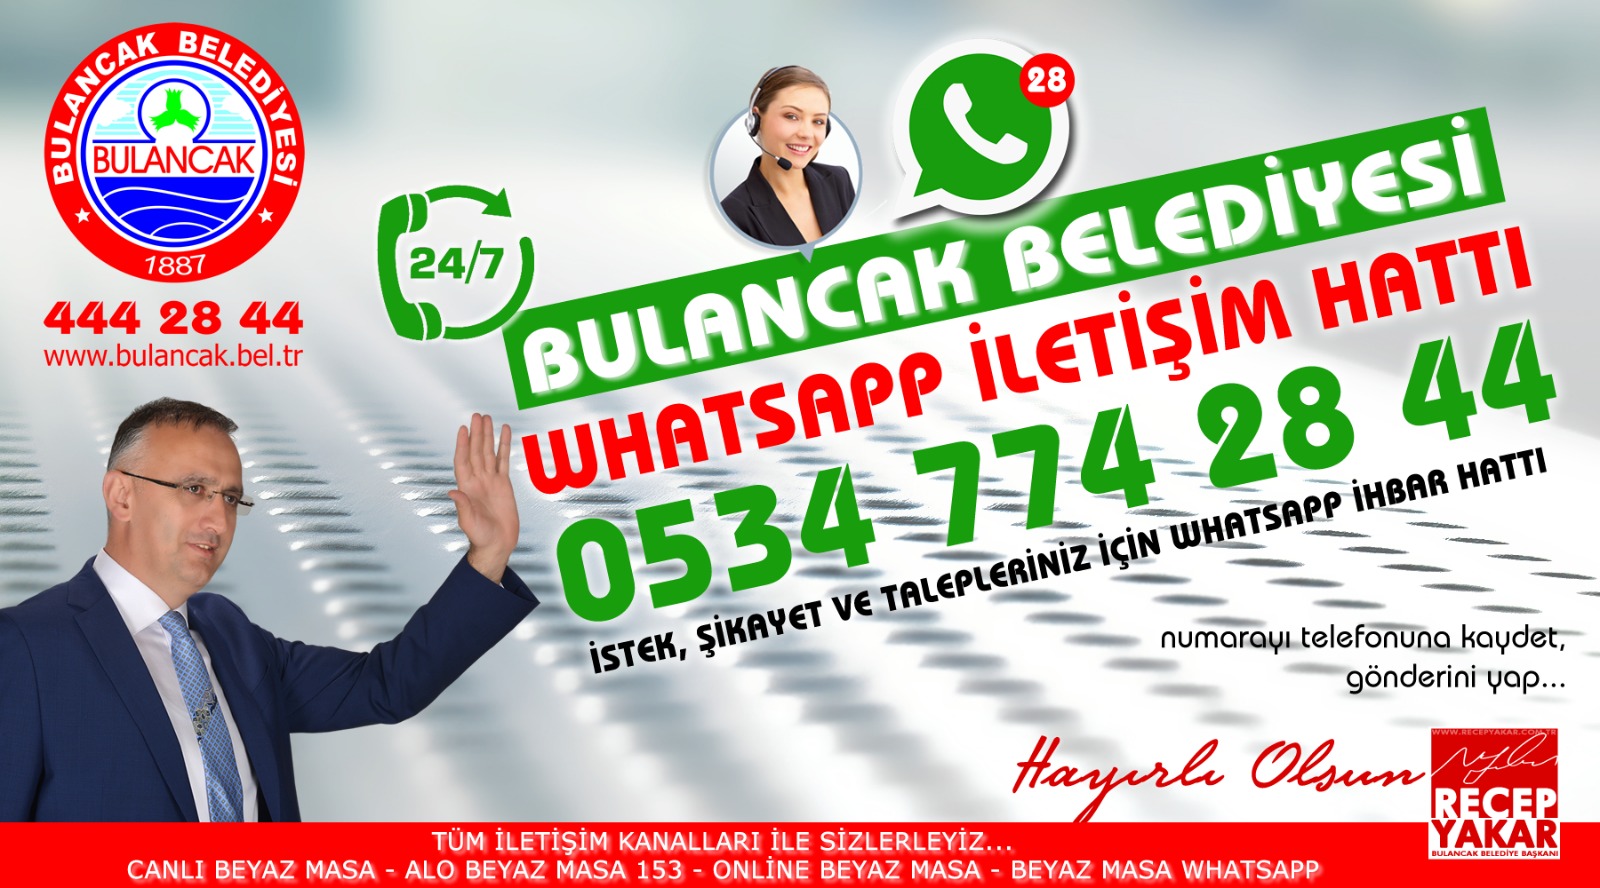 Bulancak Belediyesi whatsapp ihbar